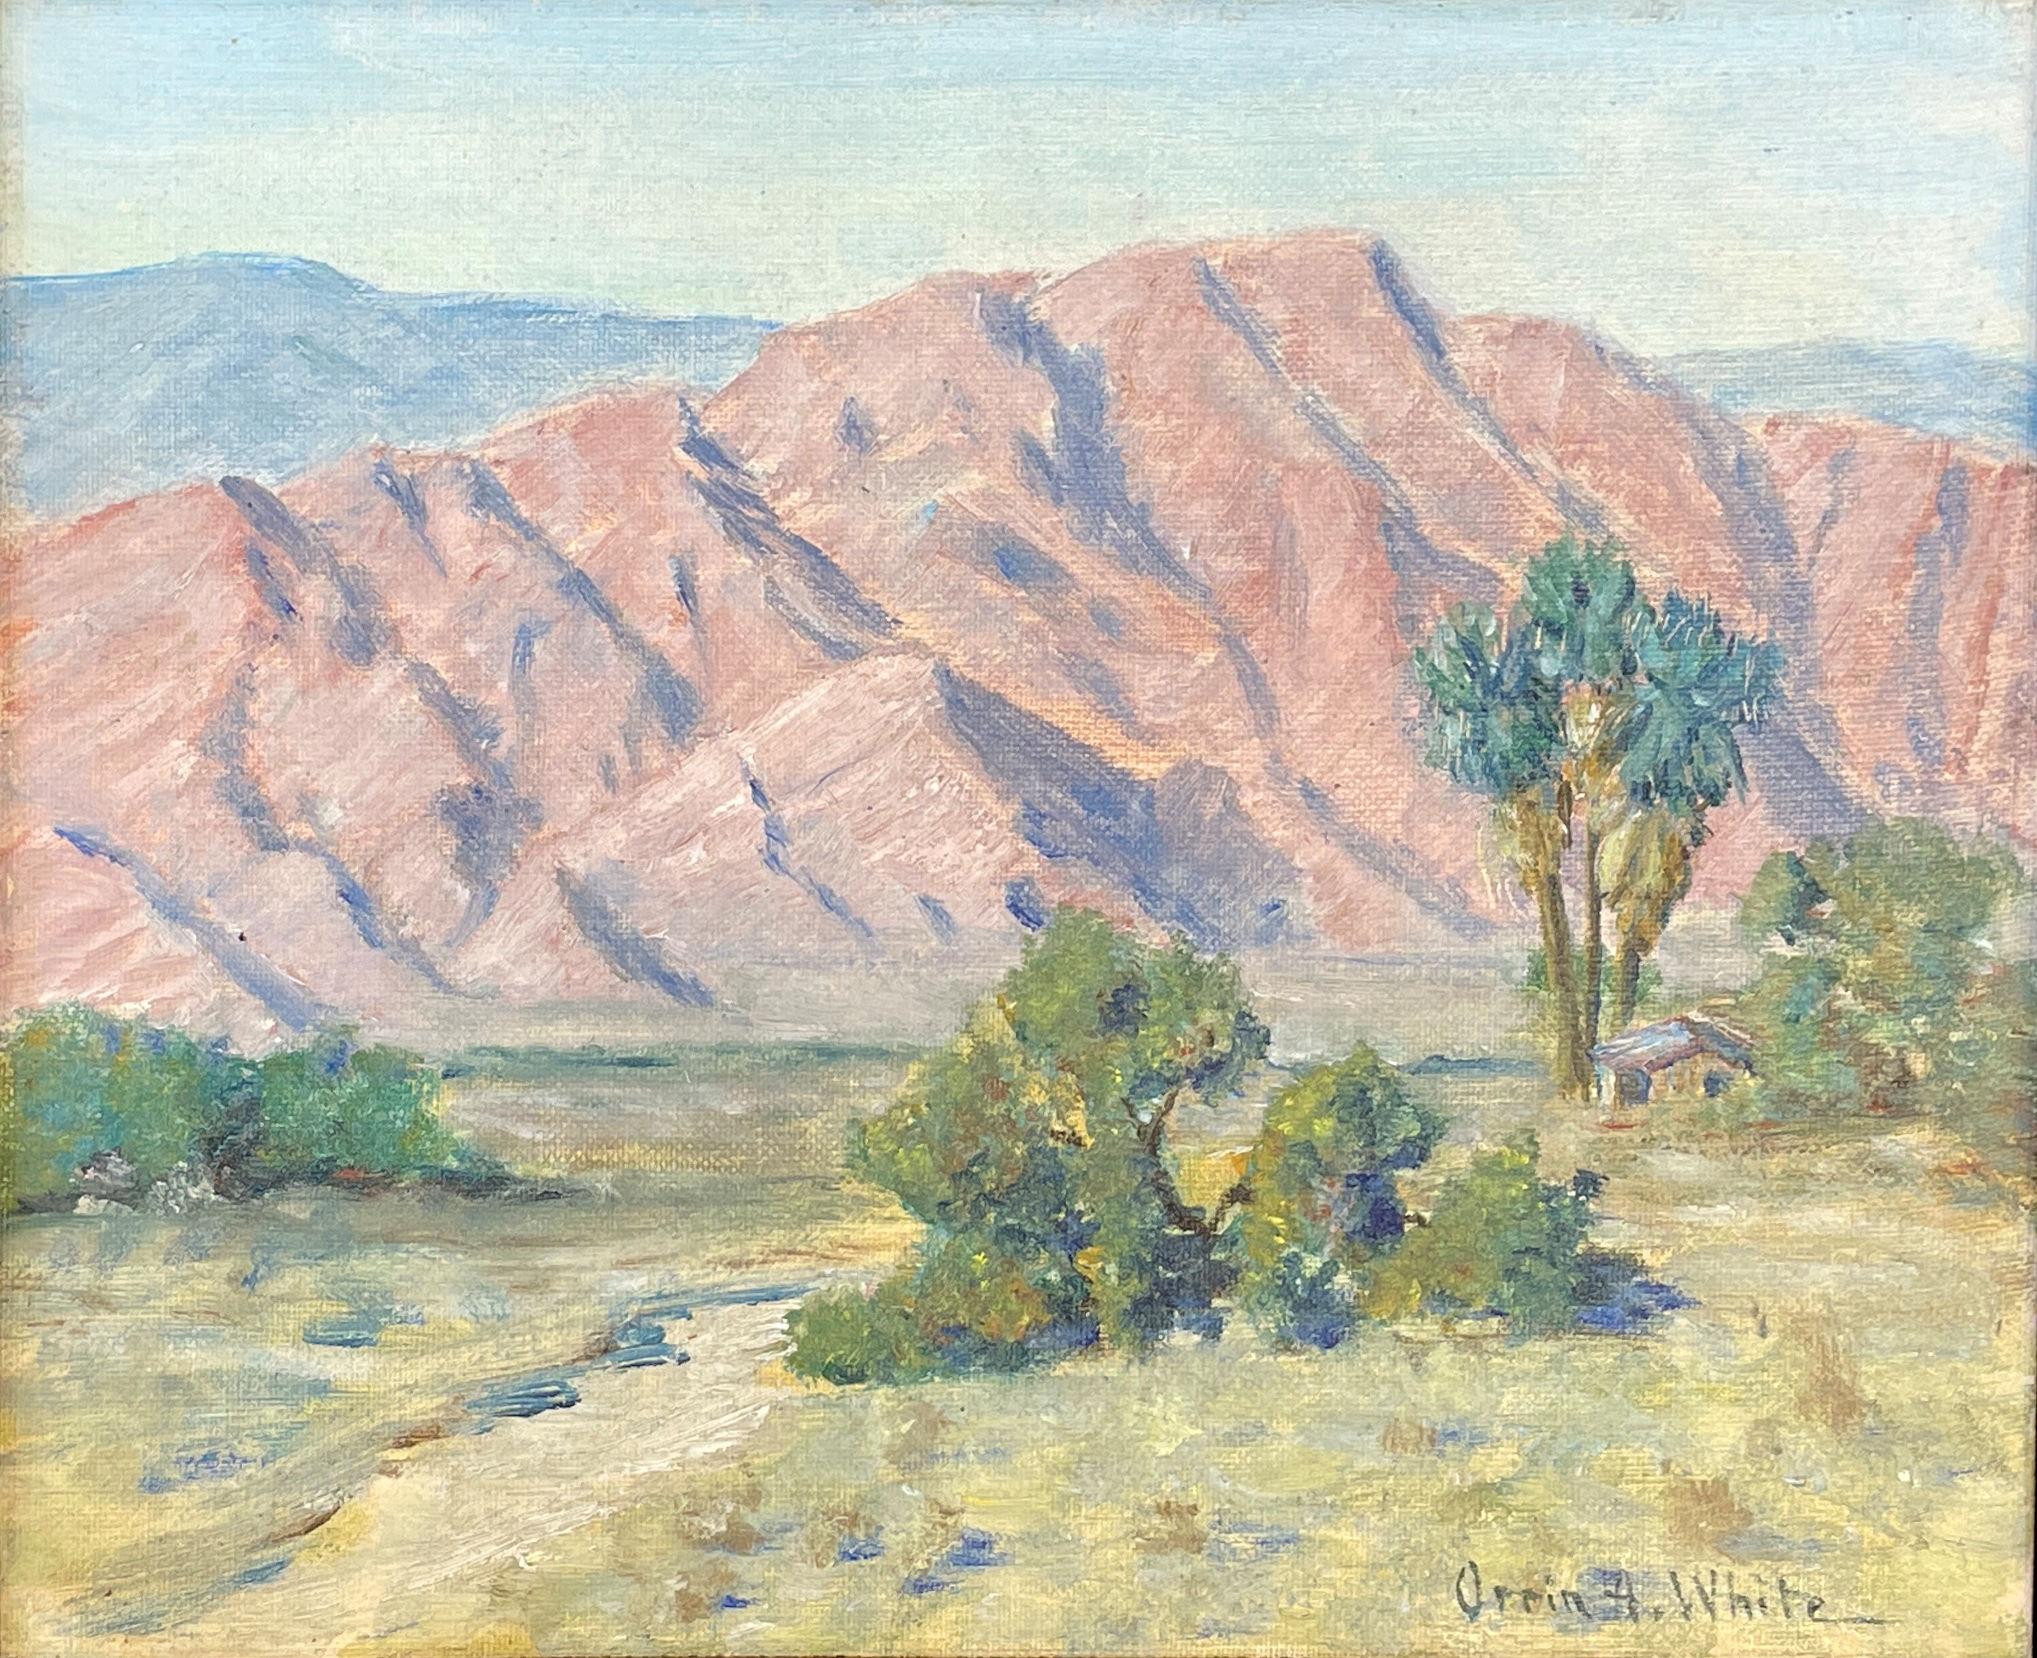 Orrin A. White Landscape Painting - "California Mountains, " Orrin White, Impressionism, Southwest Desert Landscape